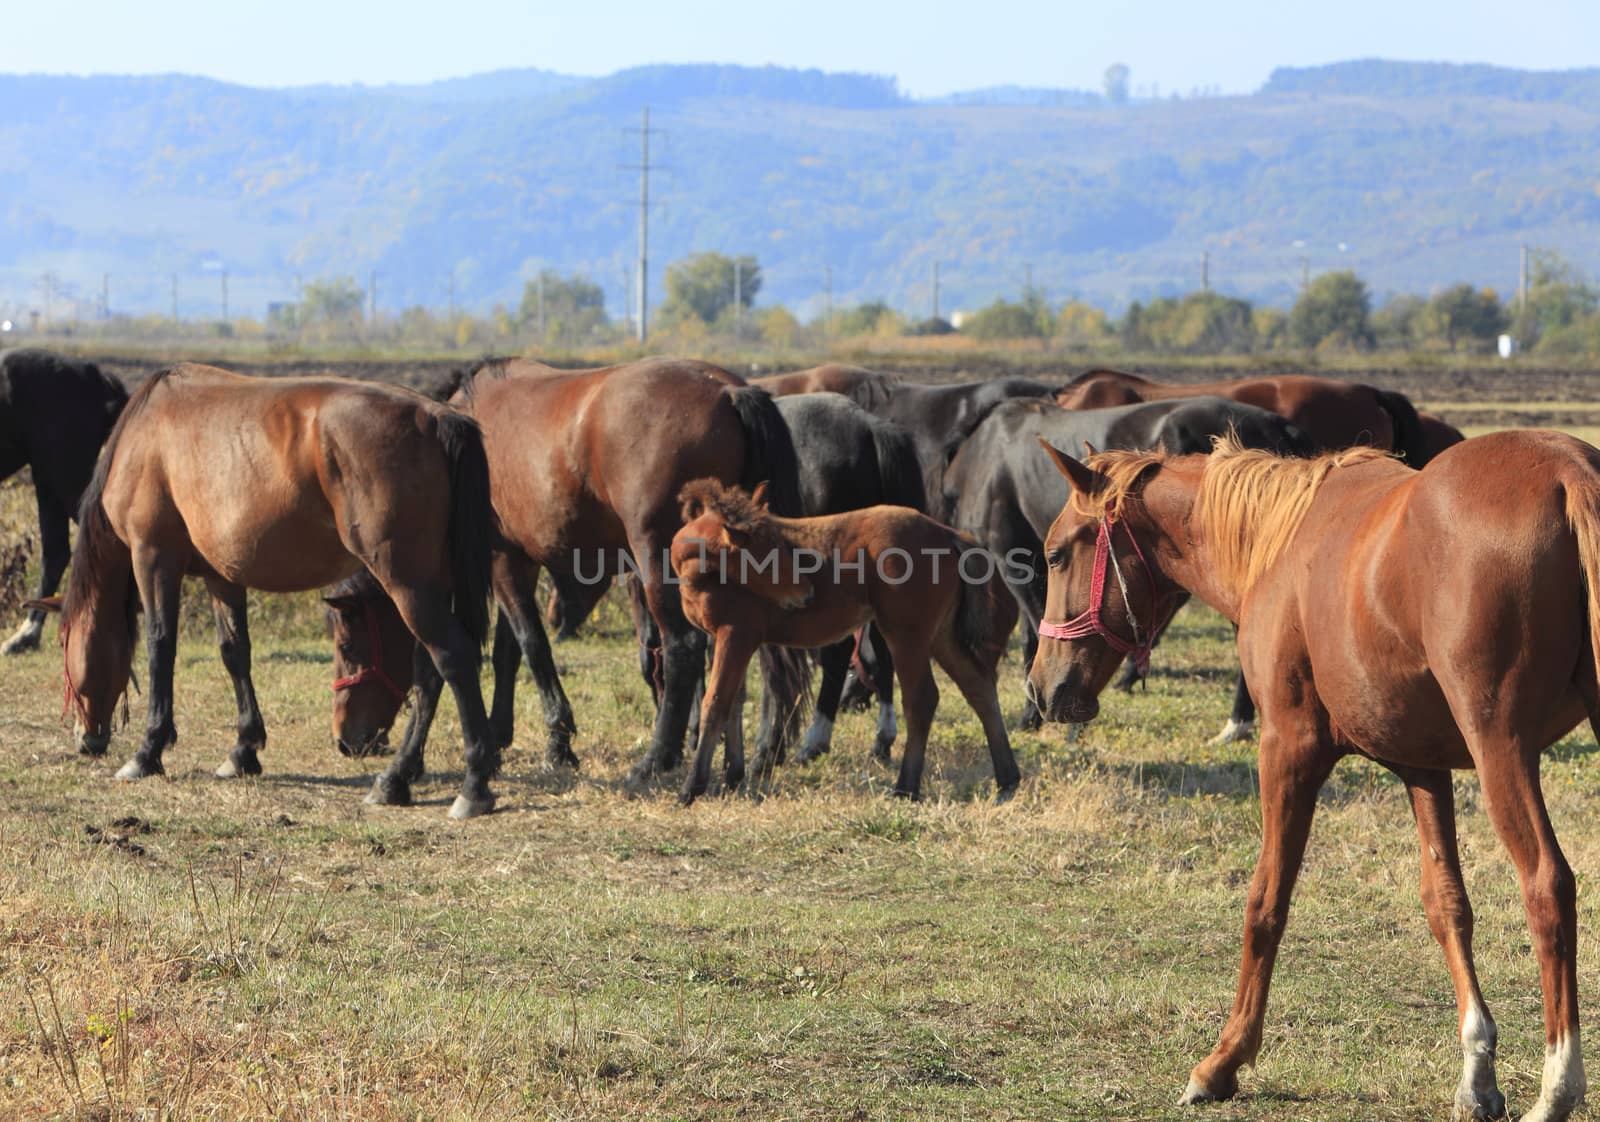 Herd of horses by RazvanPhotography